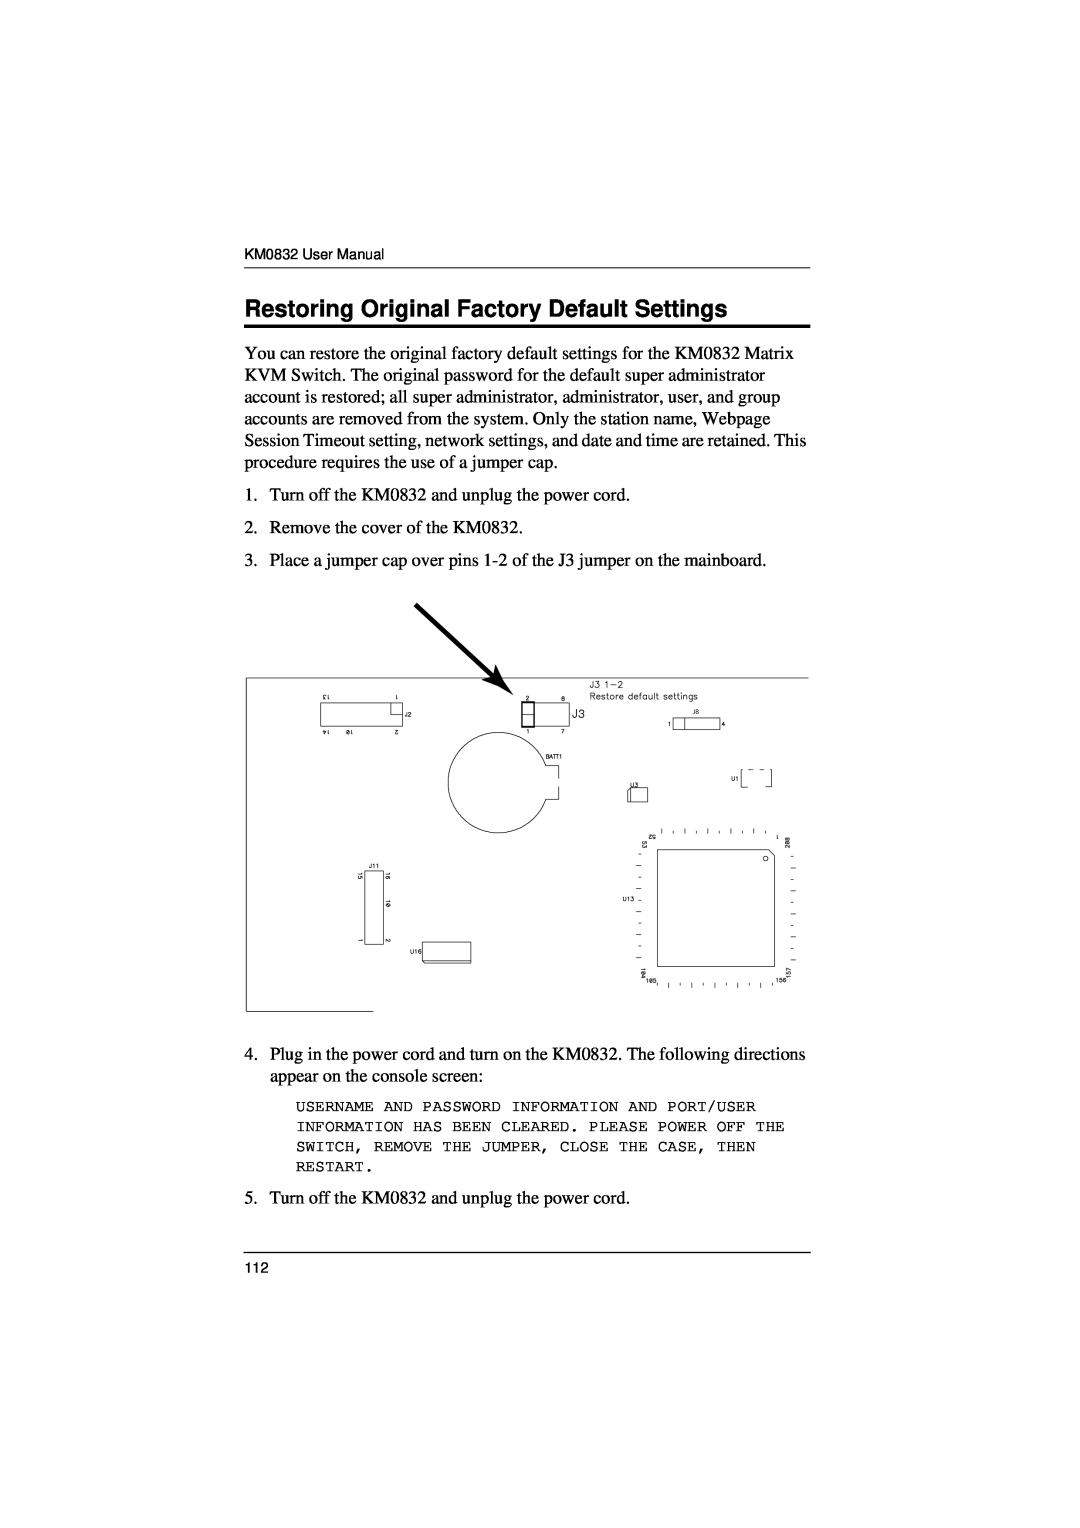 ATEN Technology KM0832 user manual Restoring Original Factory Default Settings 